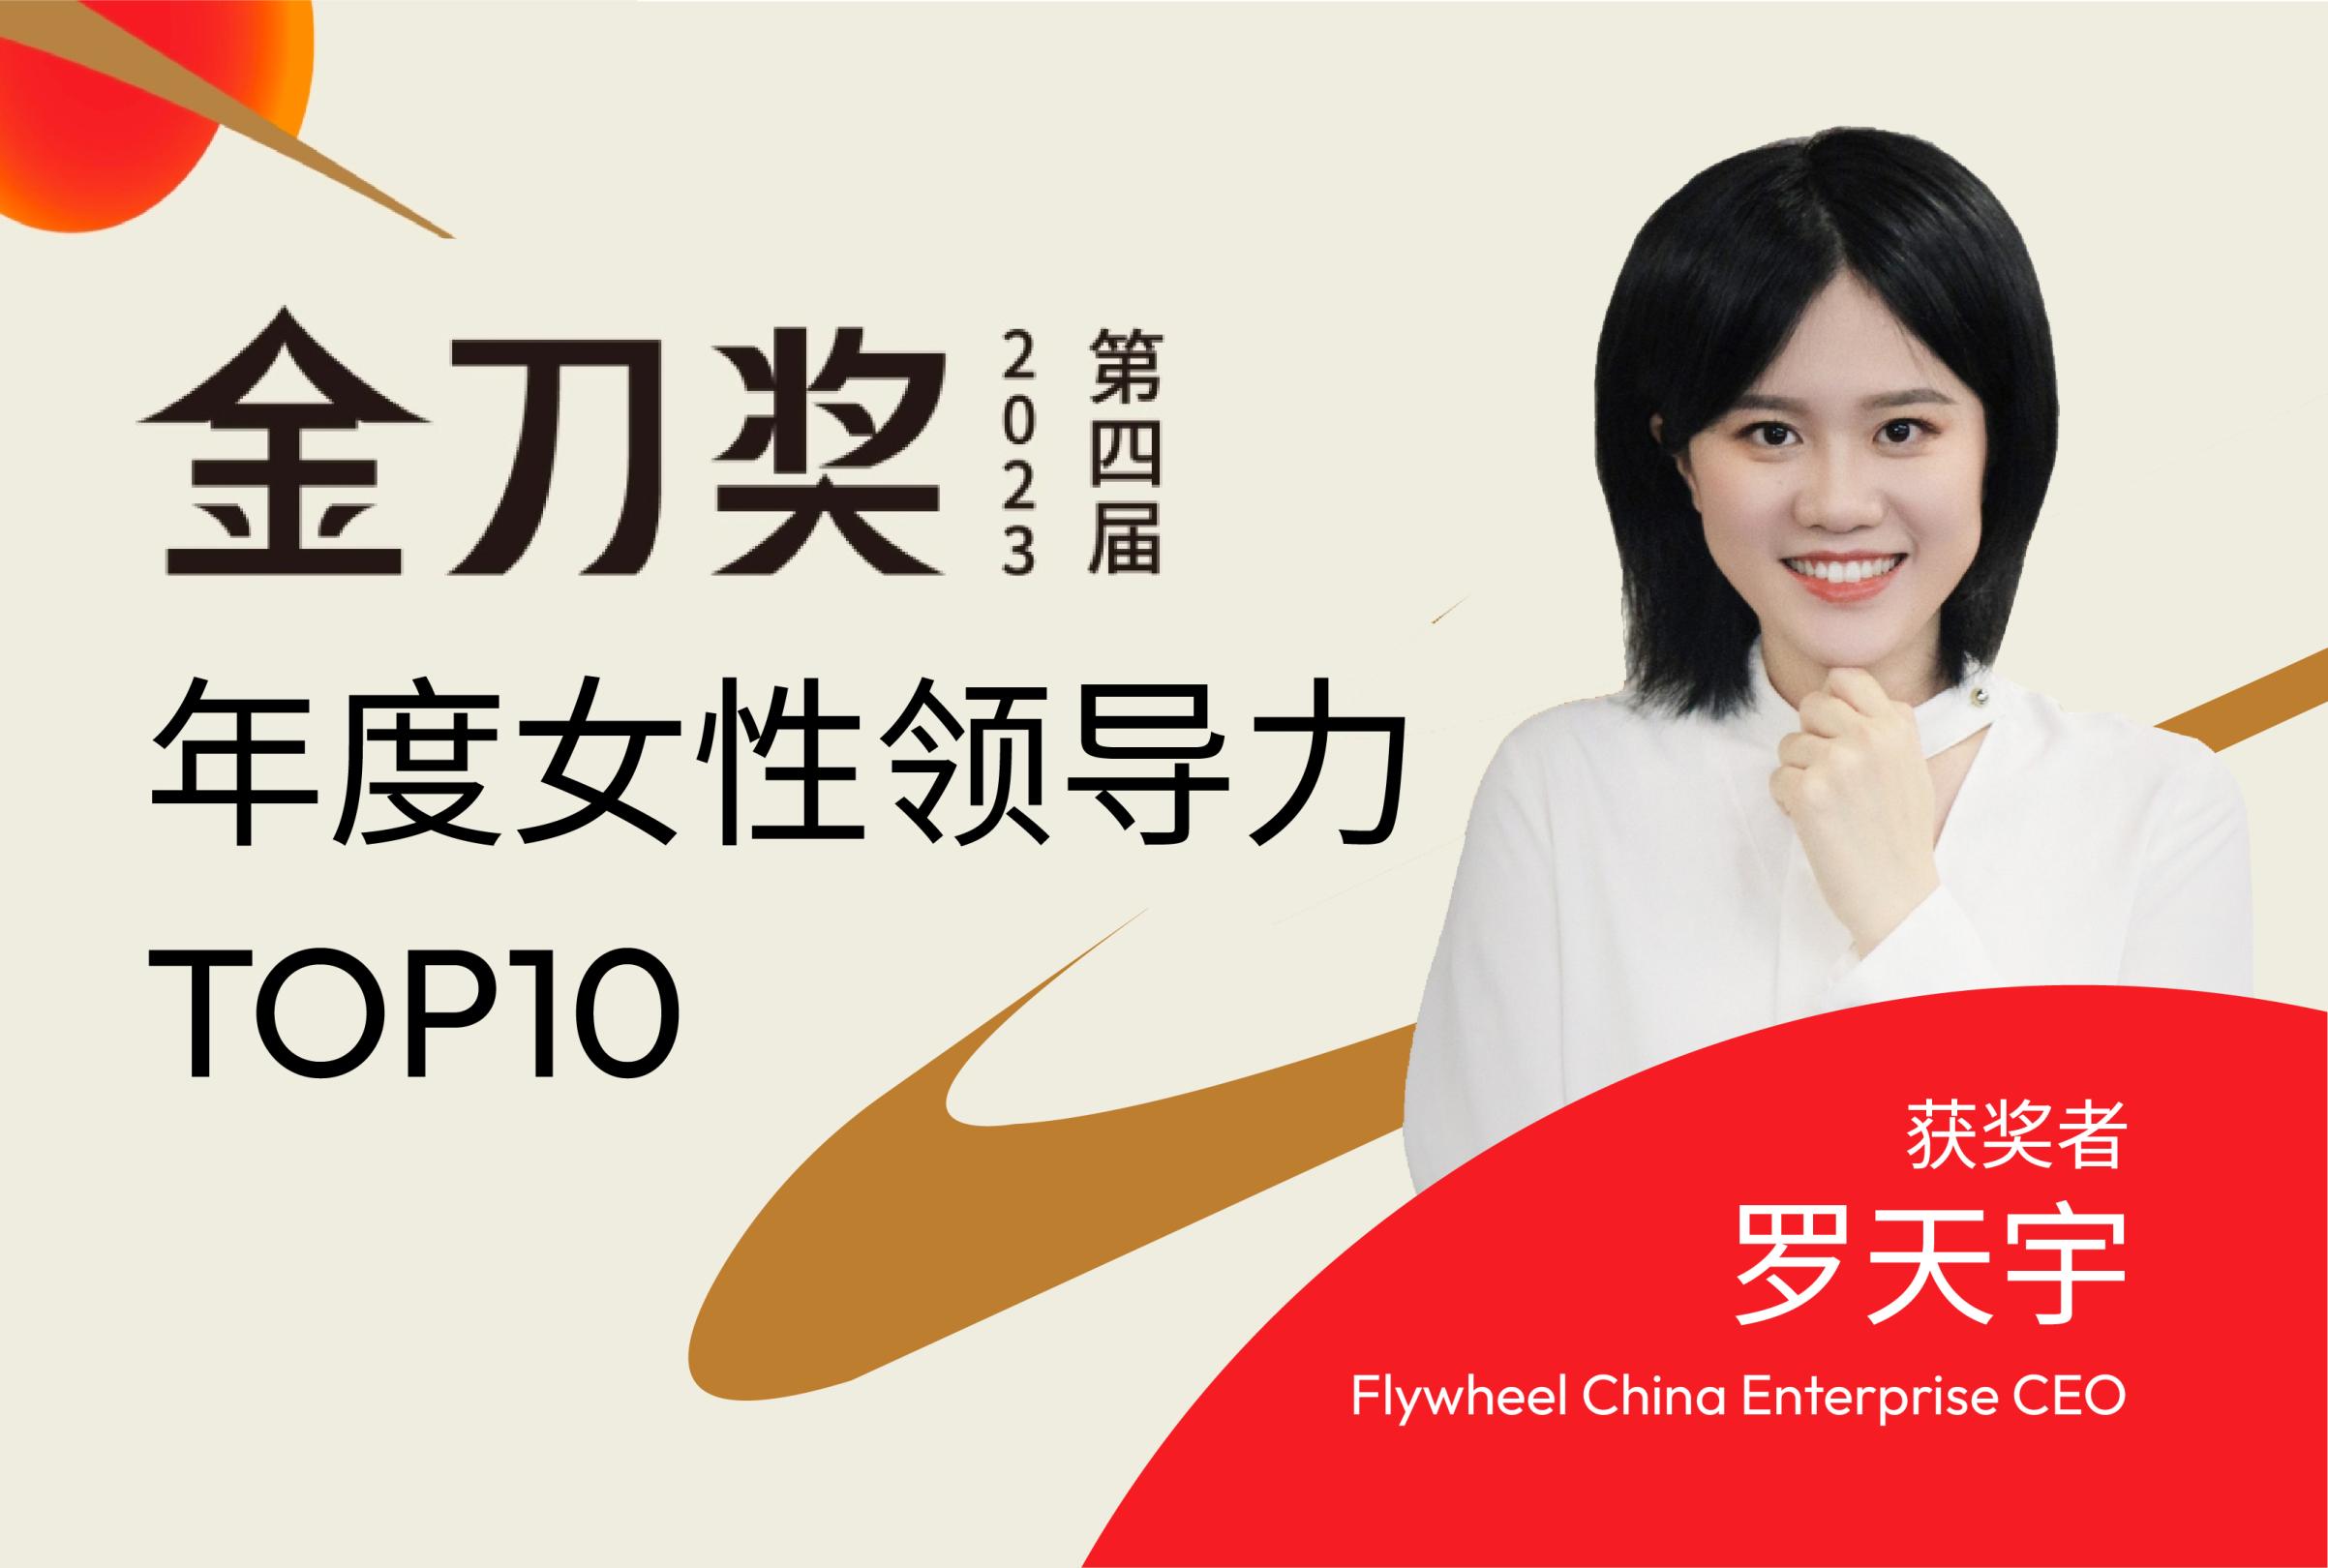 Flywheel China Enterprise CEO罗天宇荣获年度女性领导力TOP10